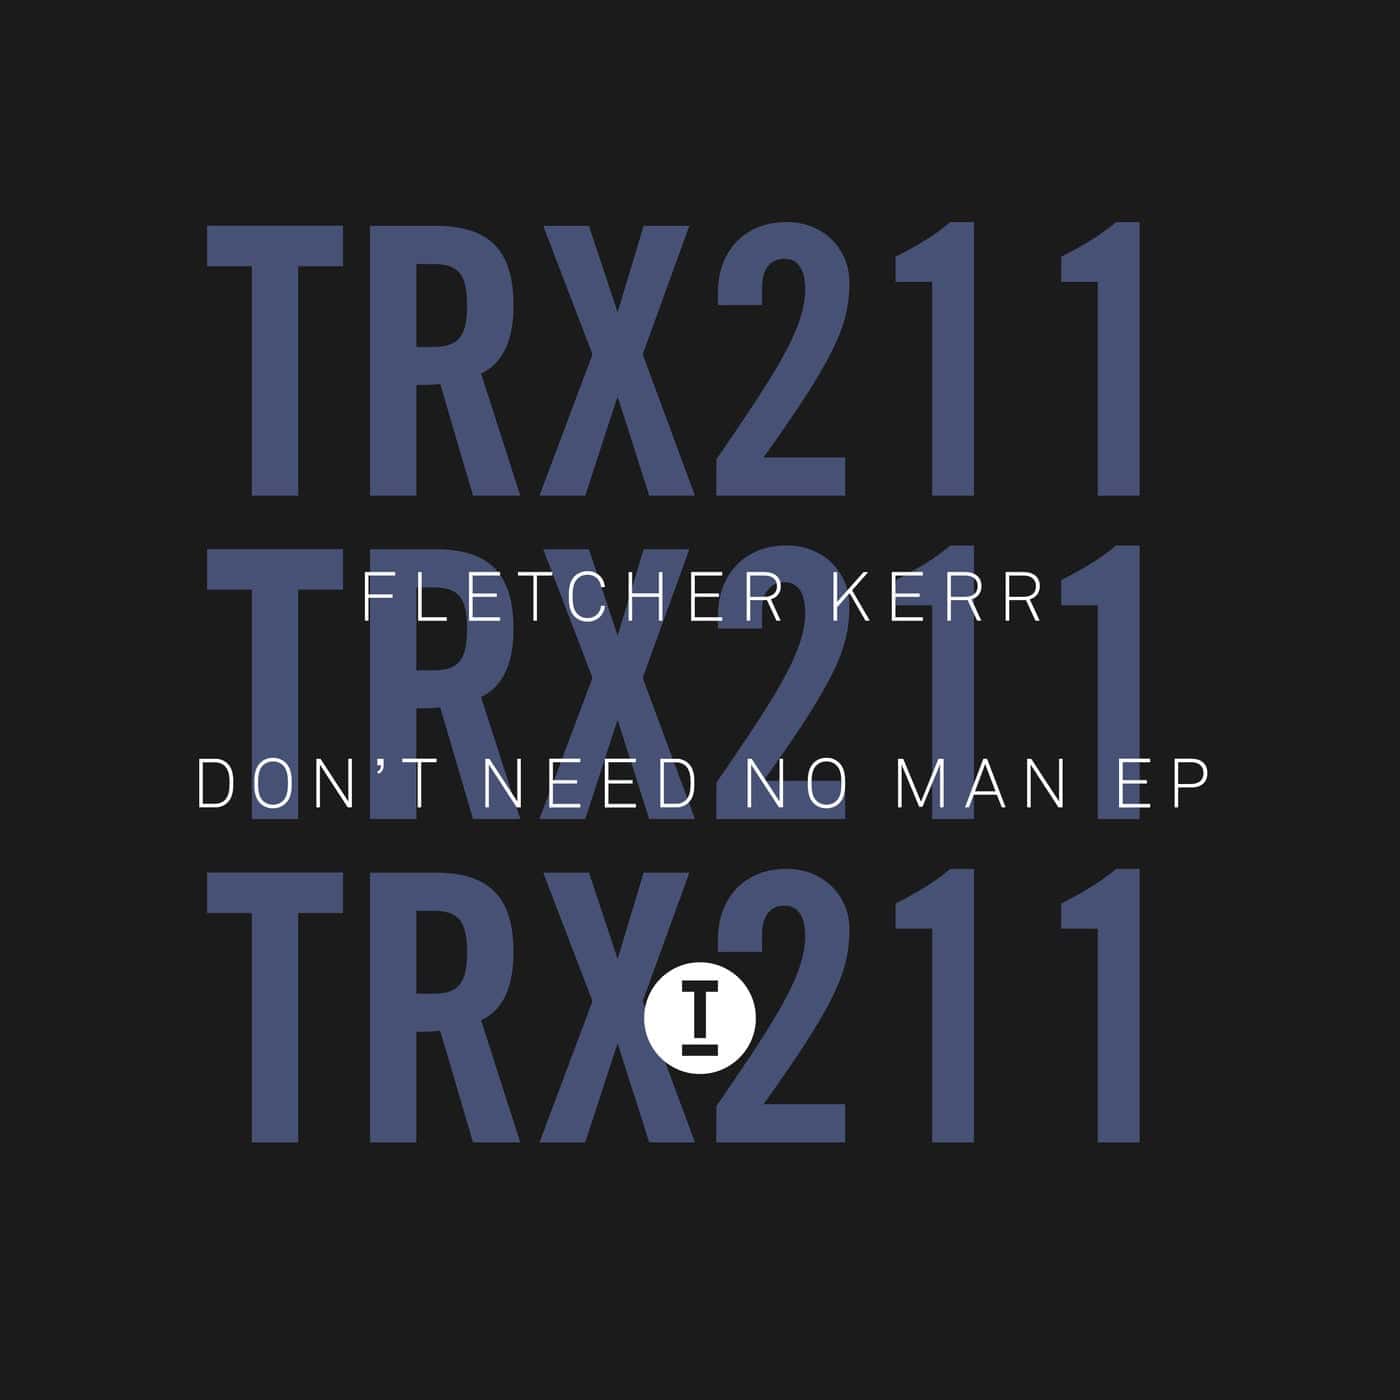 image cover: Fletcher Kerr - Don't Need No Man EP / TRX21101Z